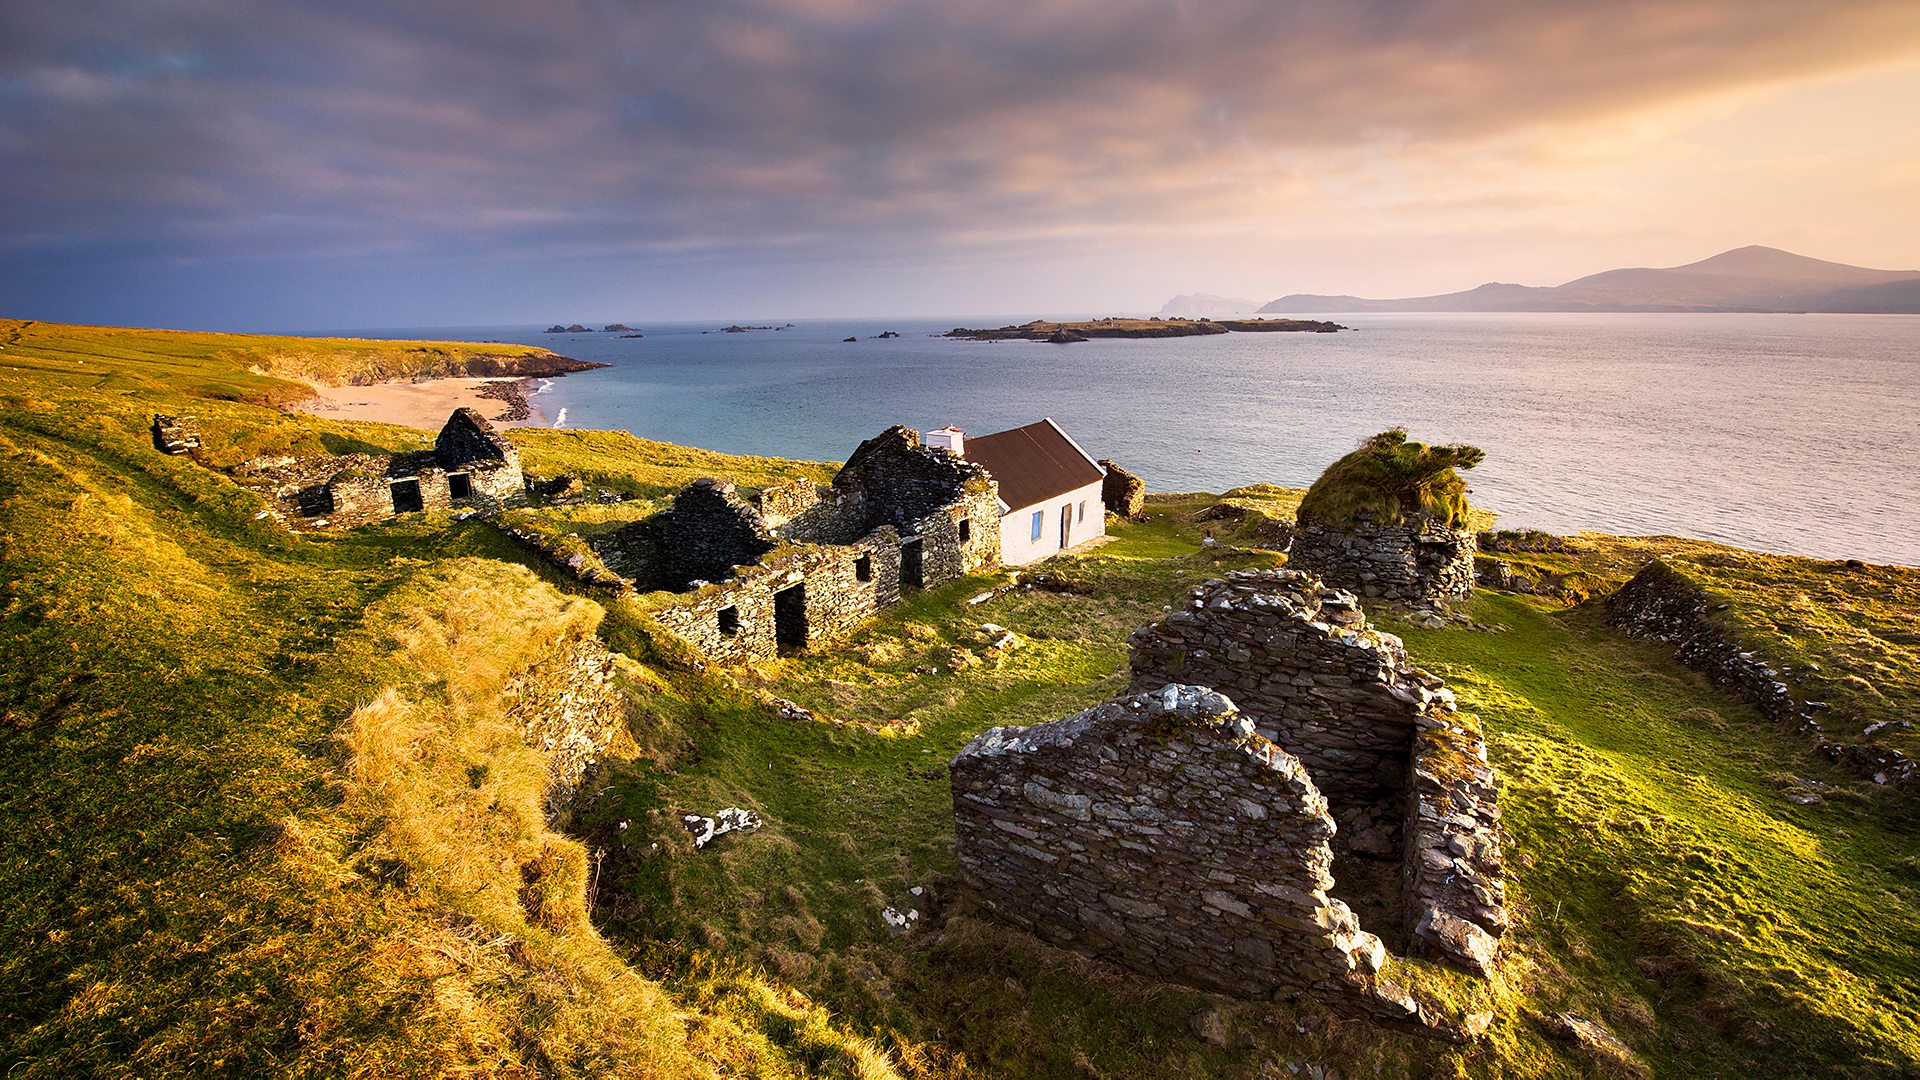 Great Blasket Island, off the coast of Ireland